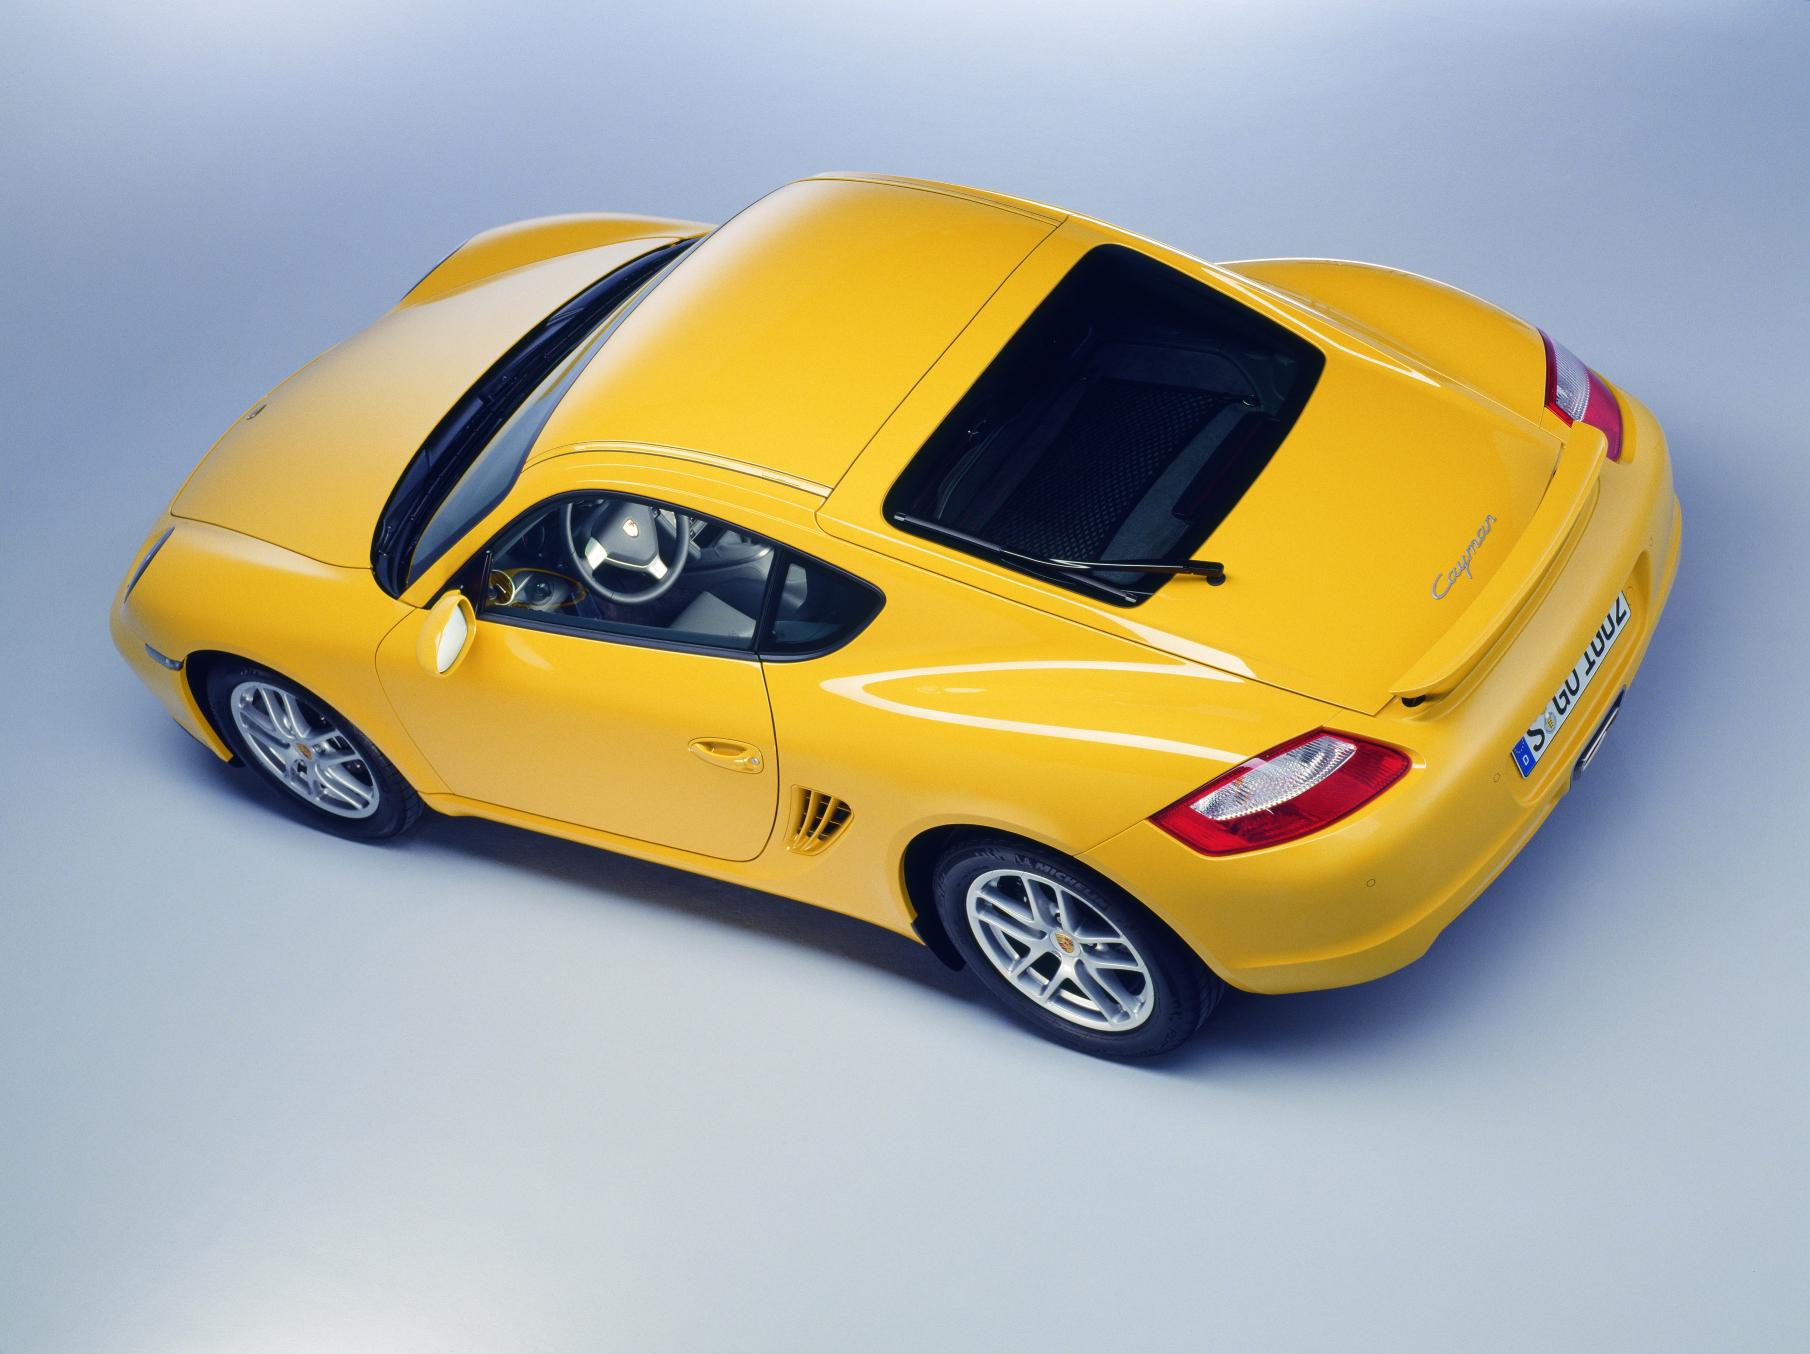 Porsche elevates its 2000s models to classic status